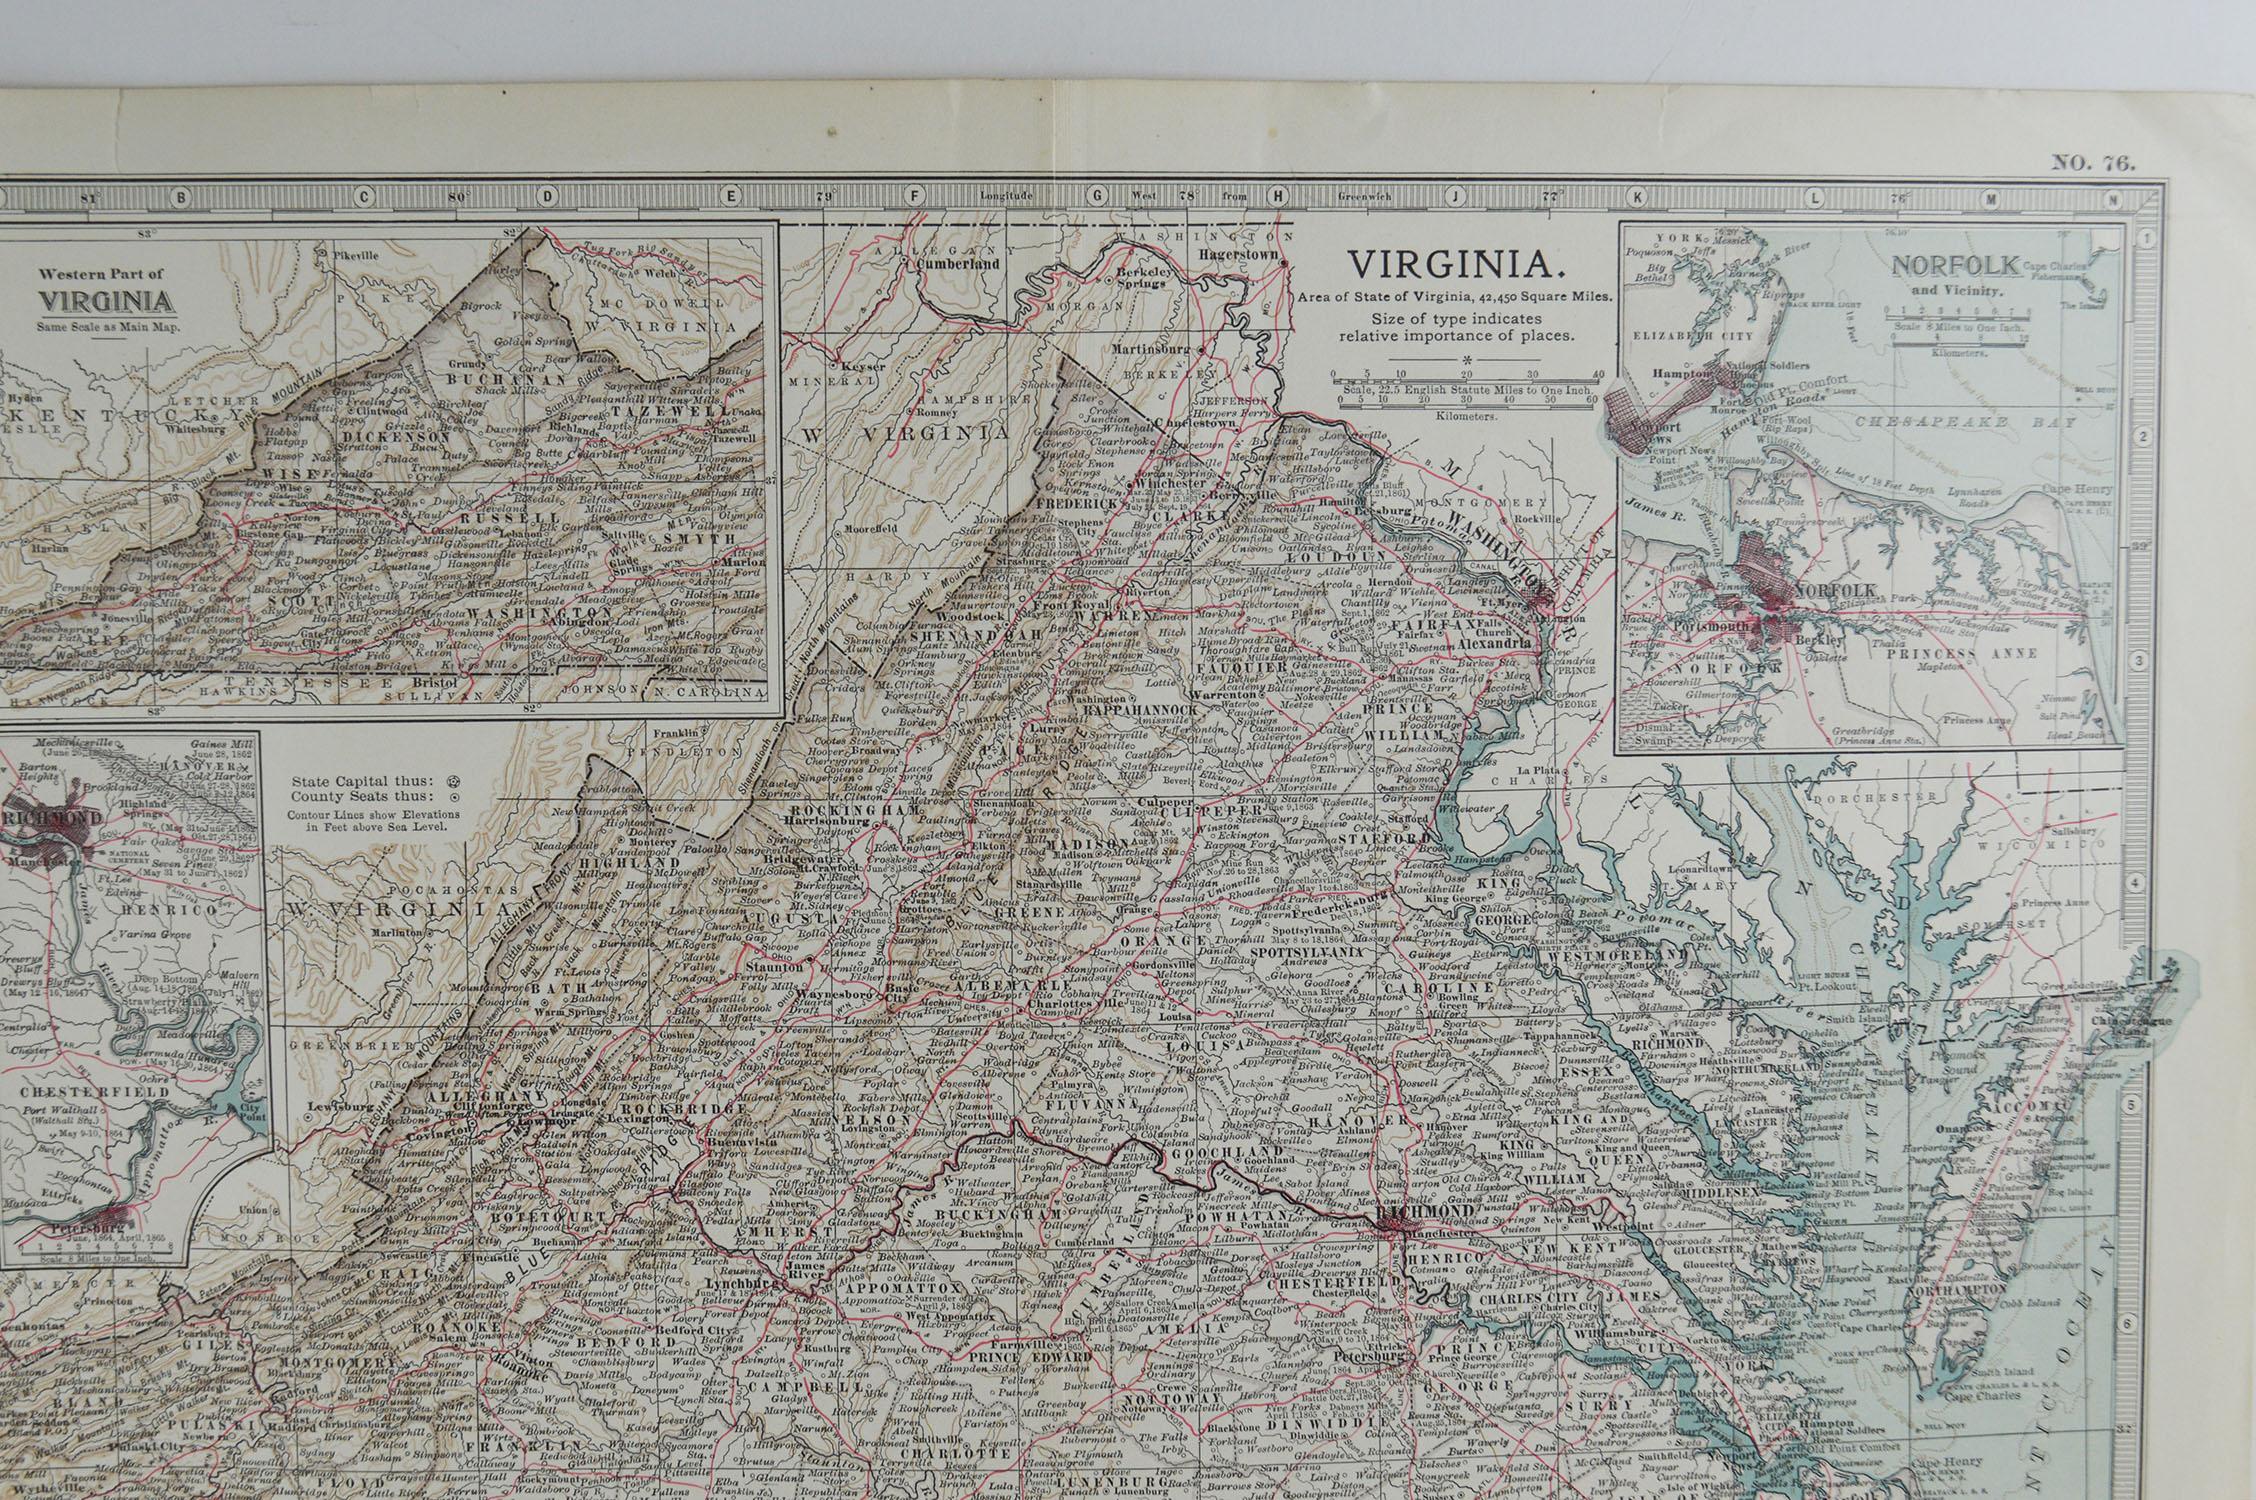 Other Original Antique Map of Virginia, circa 1890